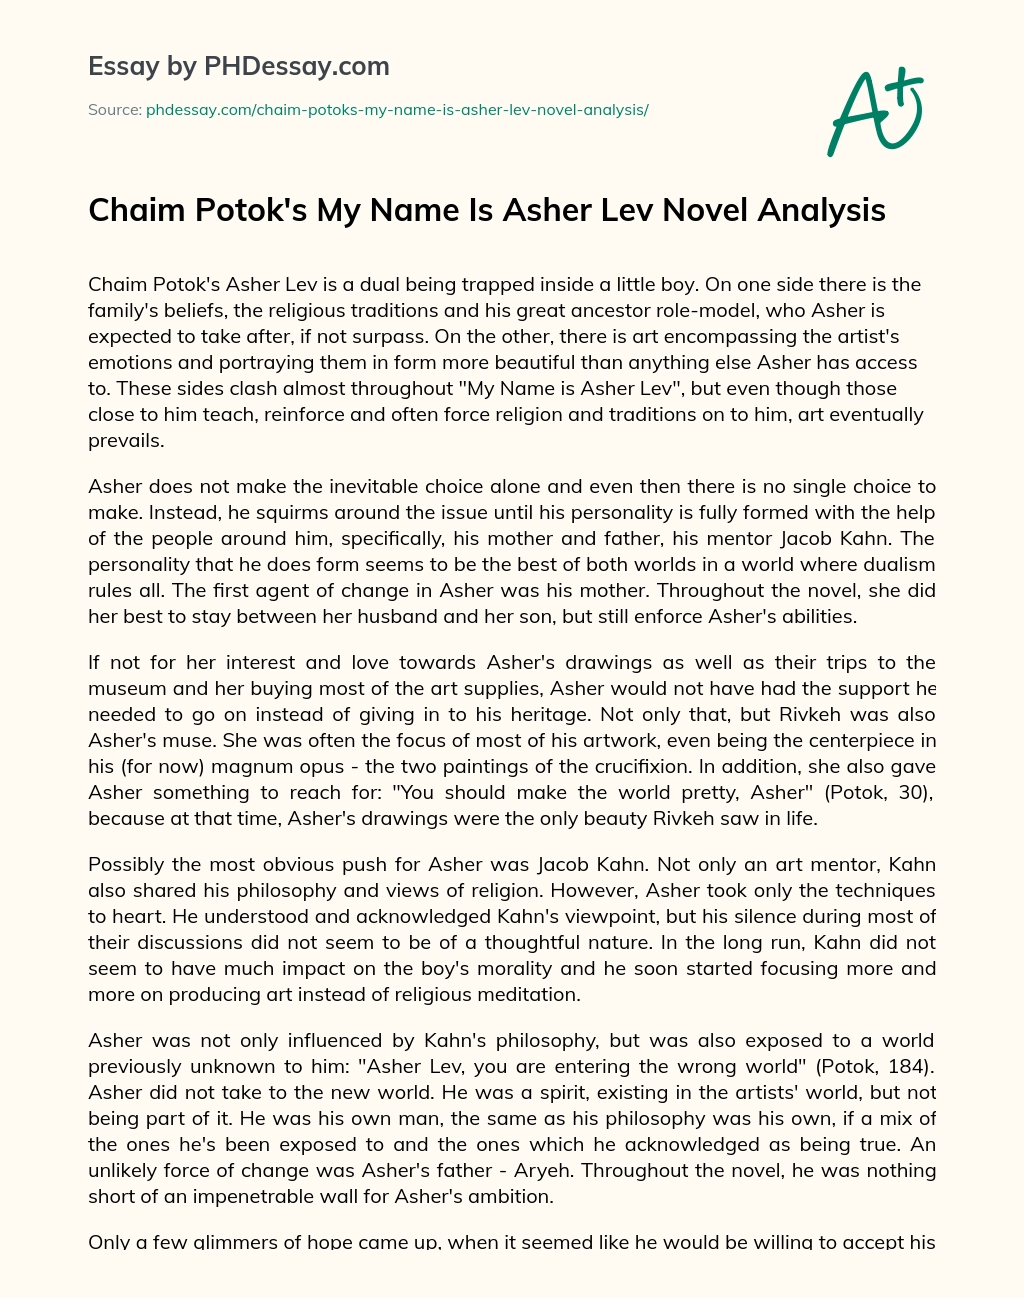 Chaim Potok’s My Name Is Asher Lev Novel Analysis essay